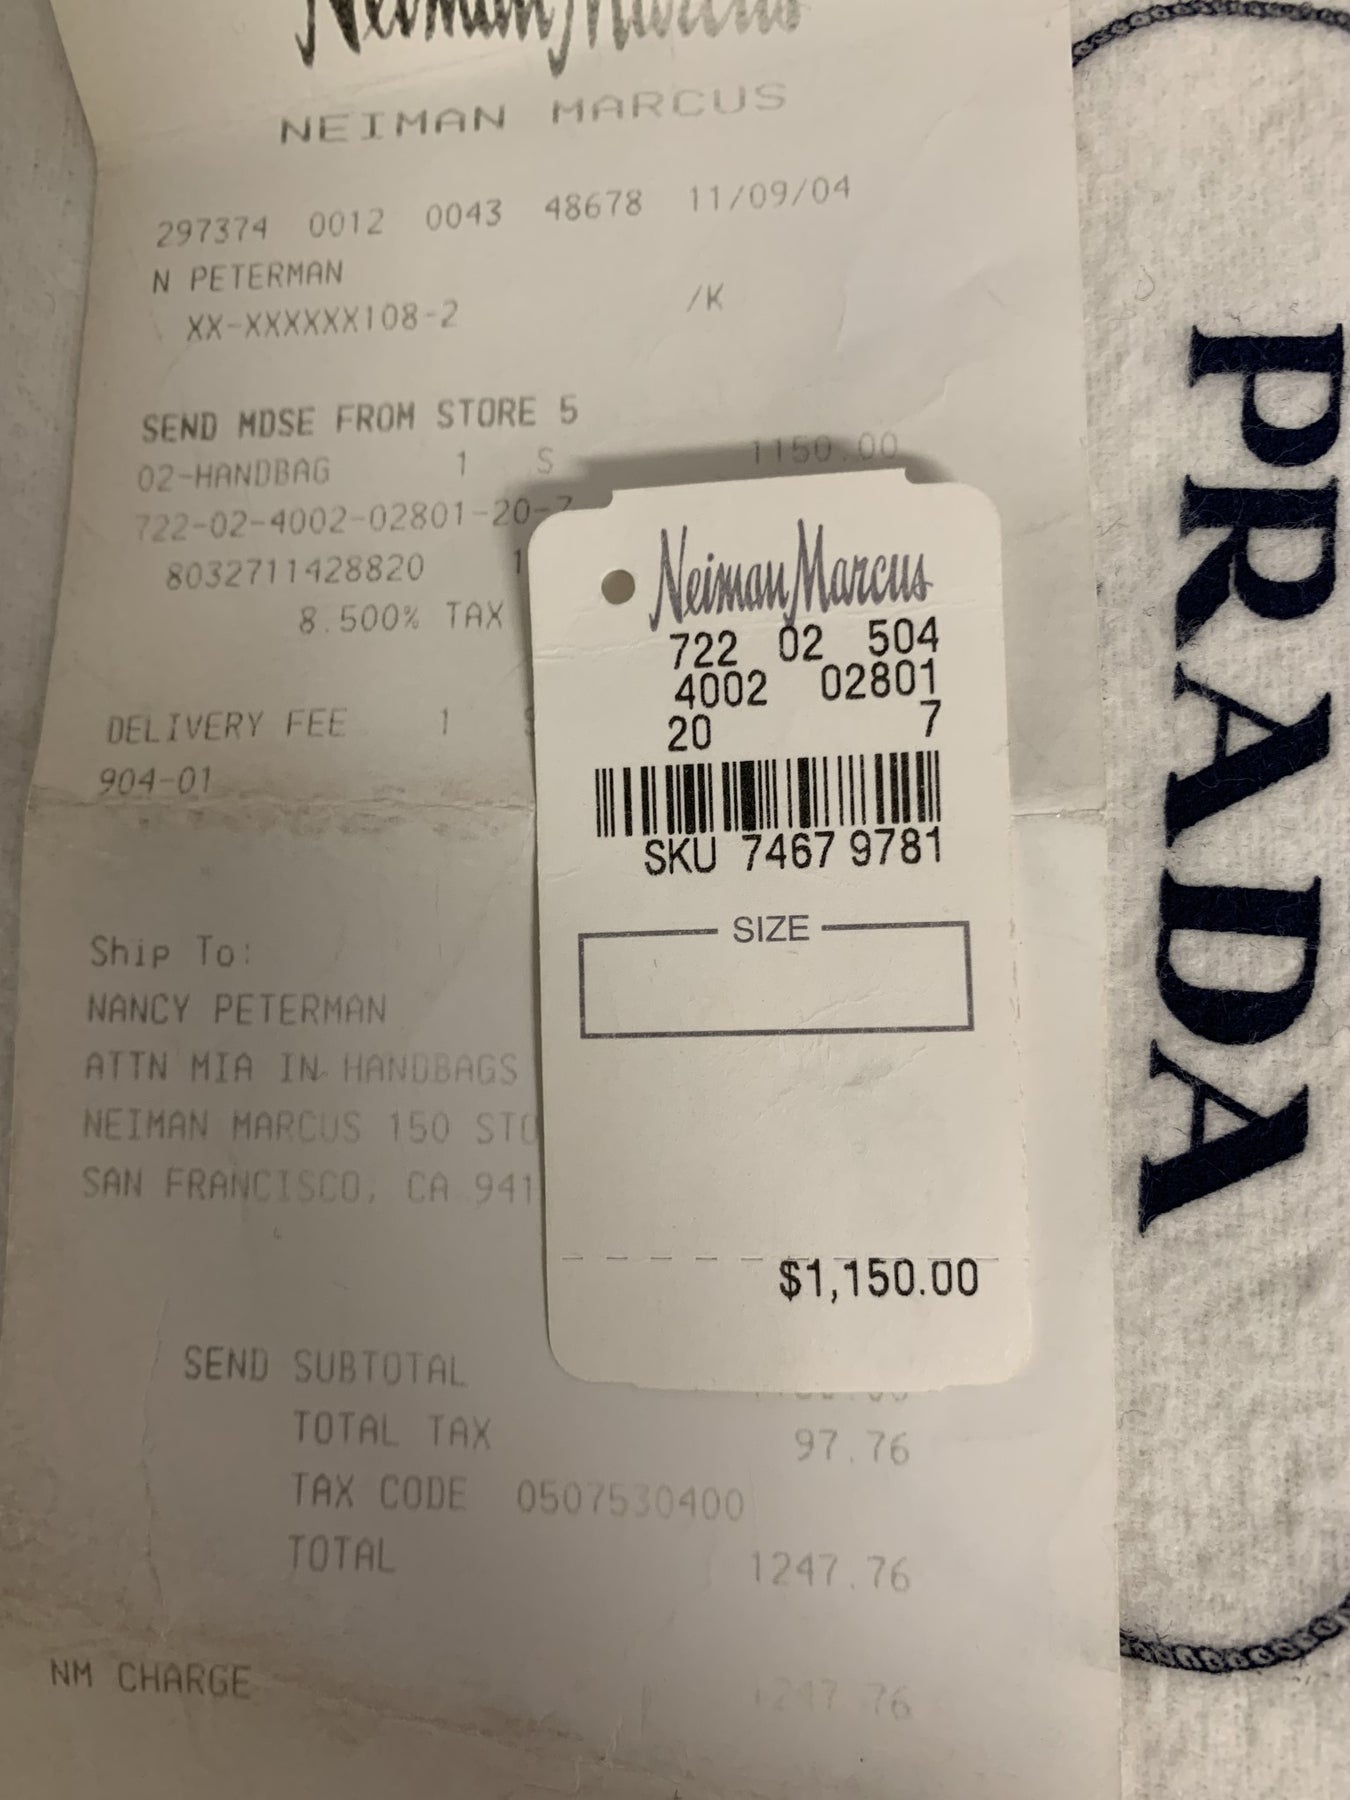 Prada bag authenticity card and receipts